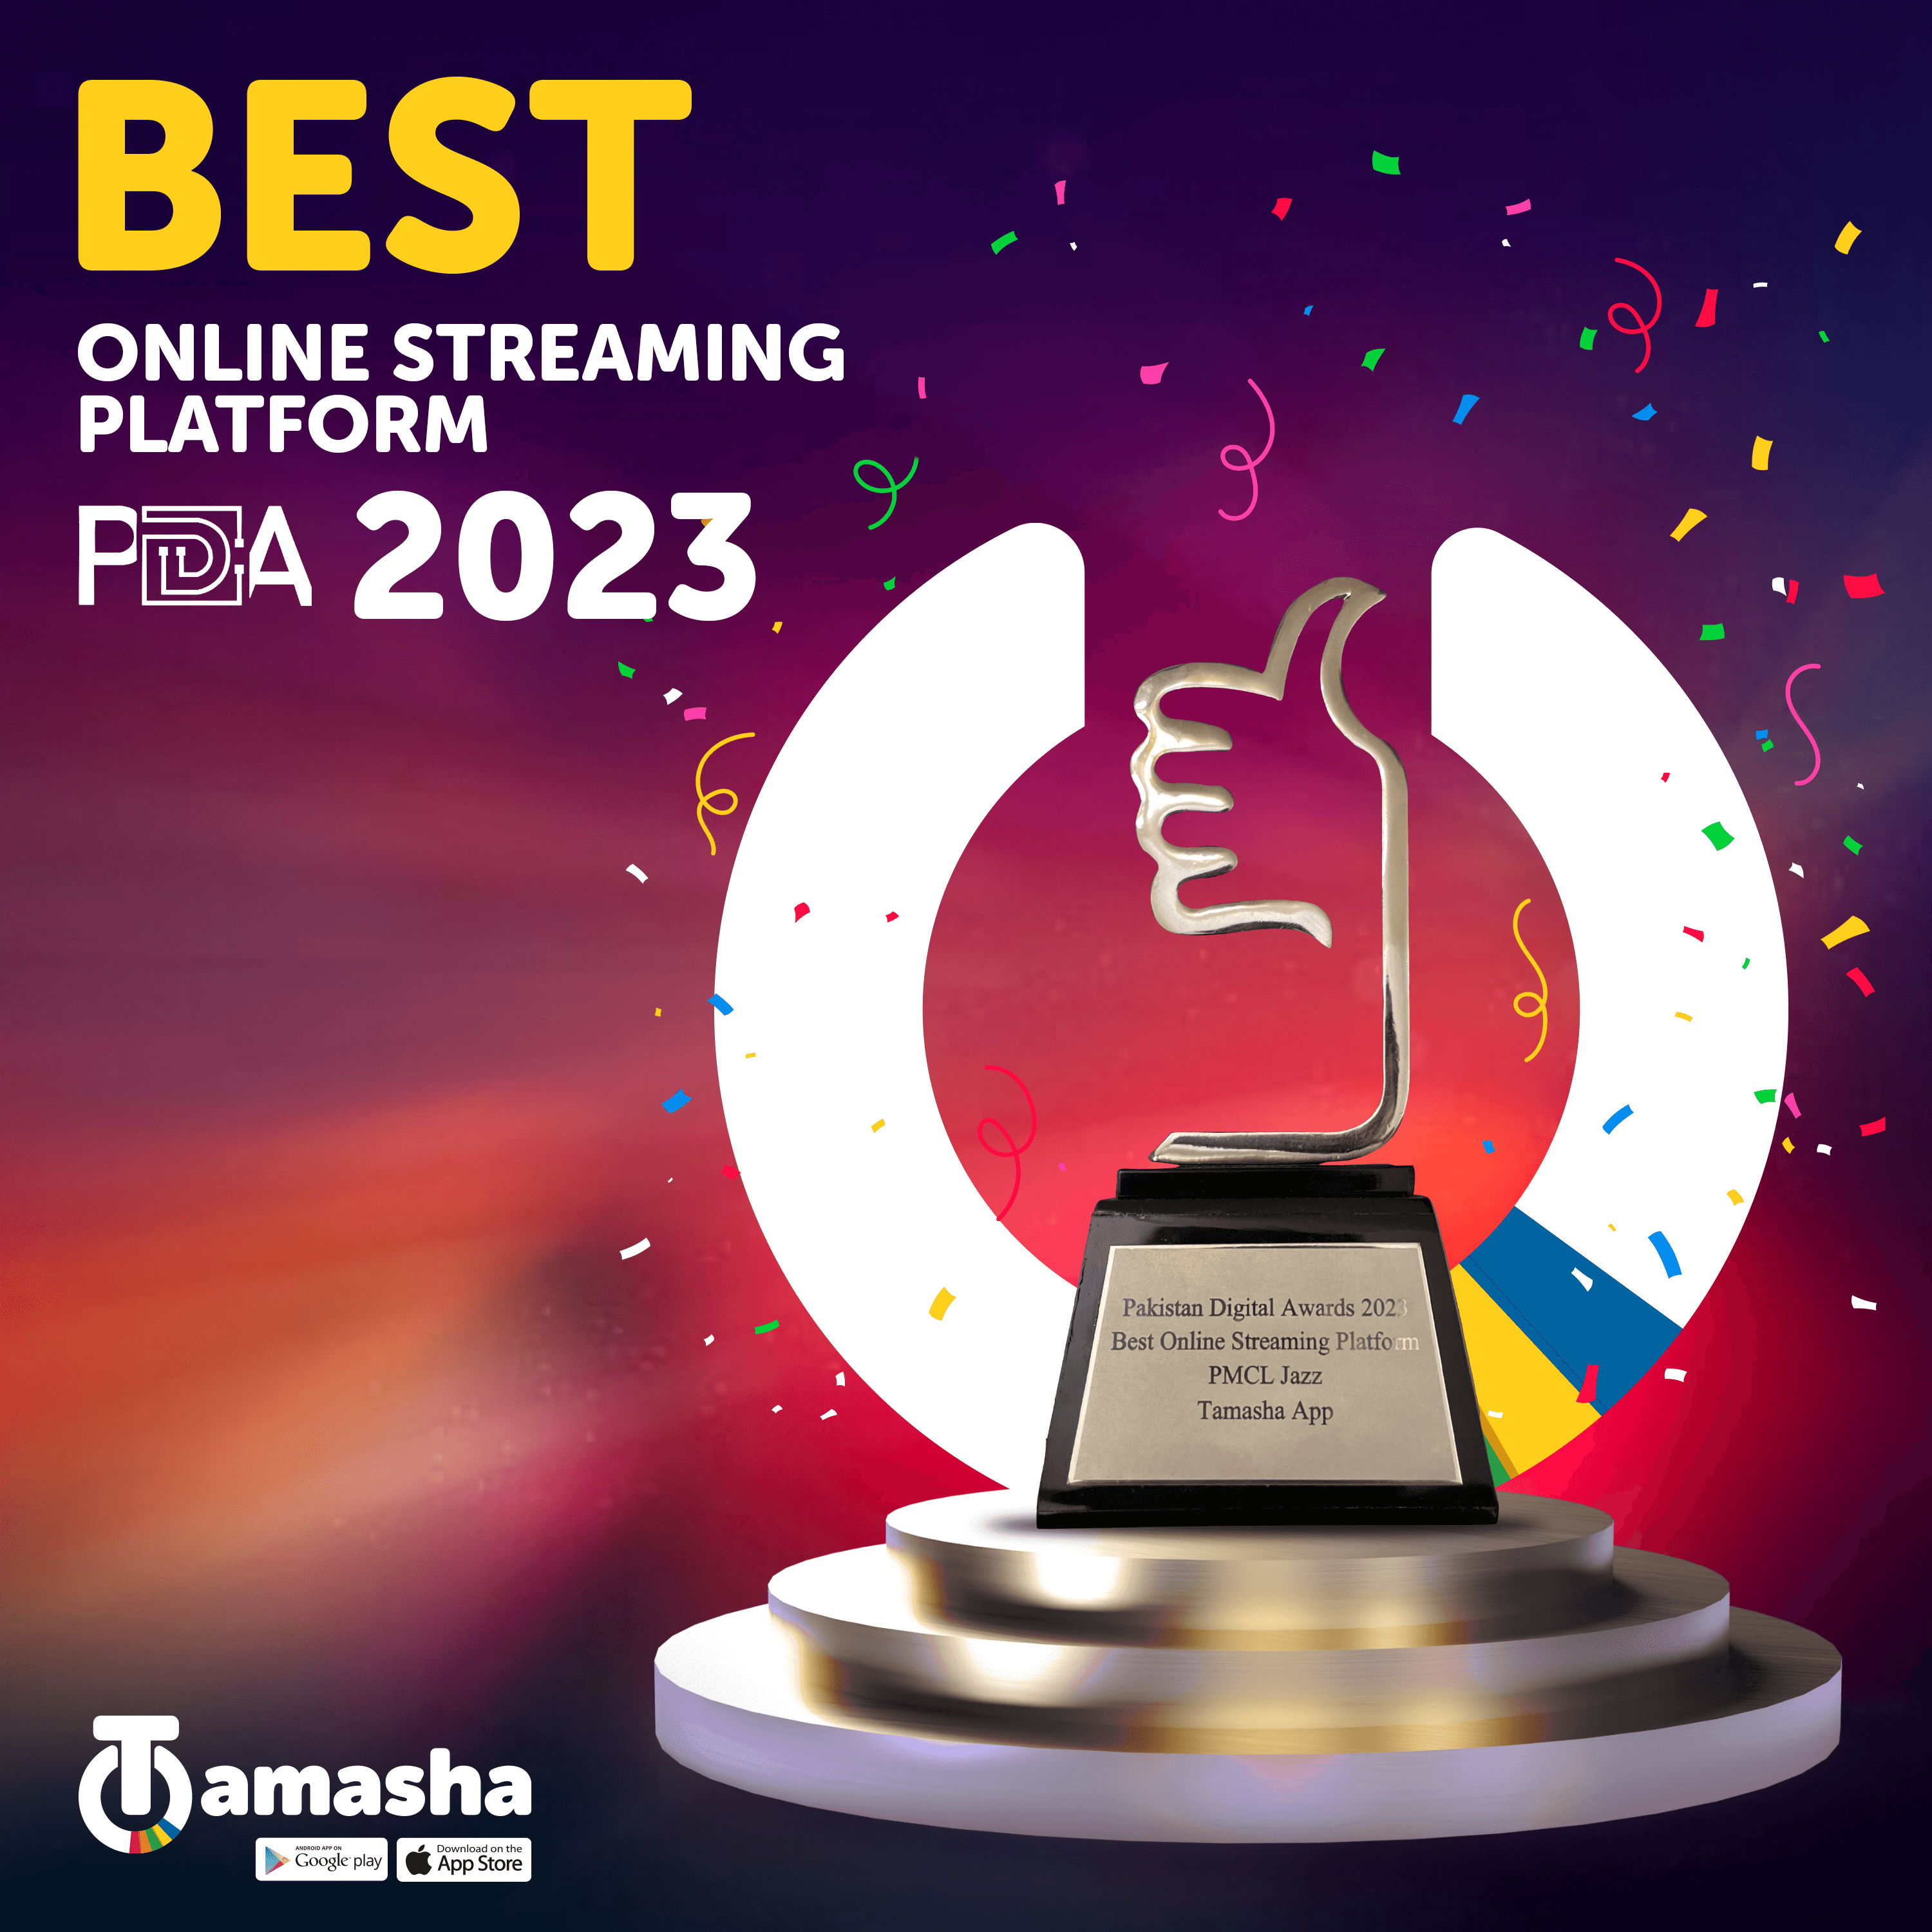 Tamasha Bags The ‘Best Online Streaming Platform’ Award